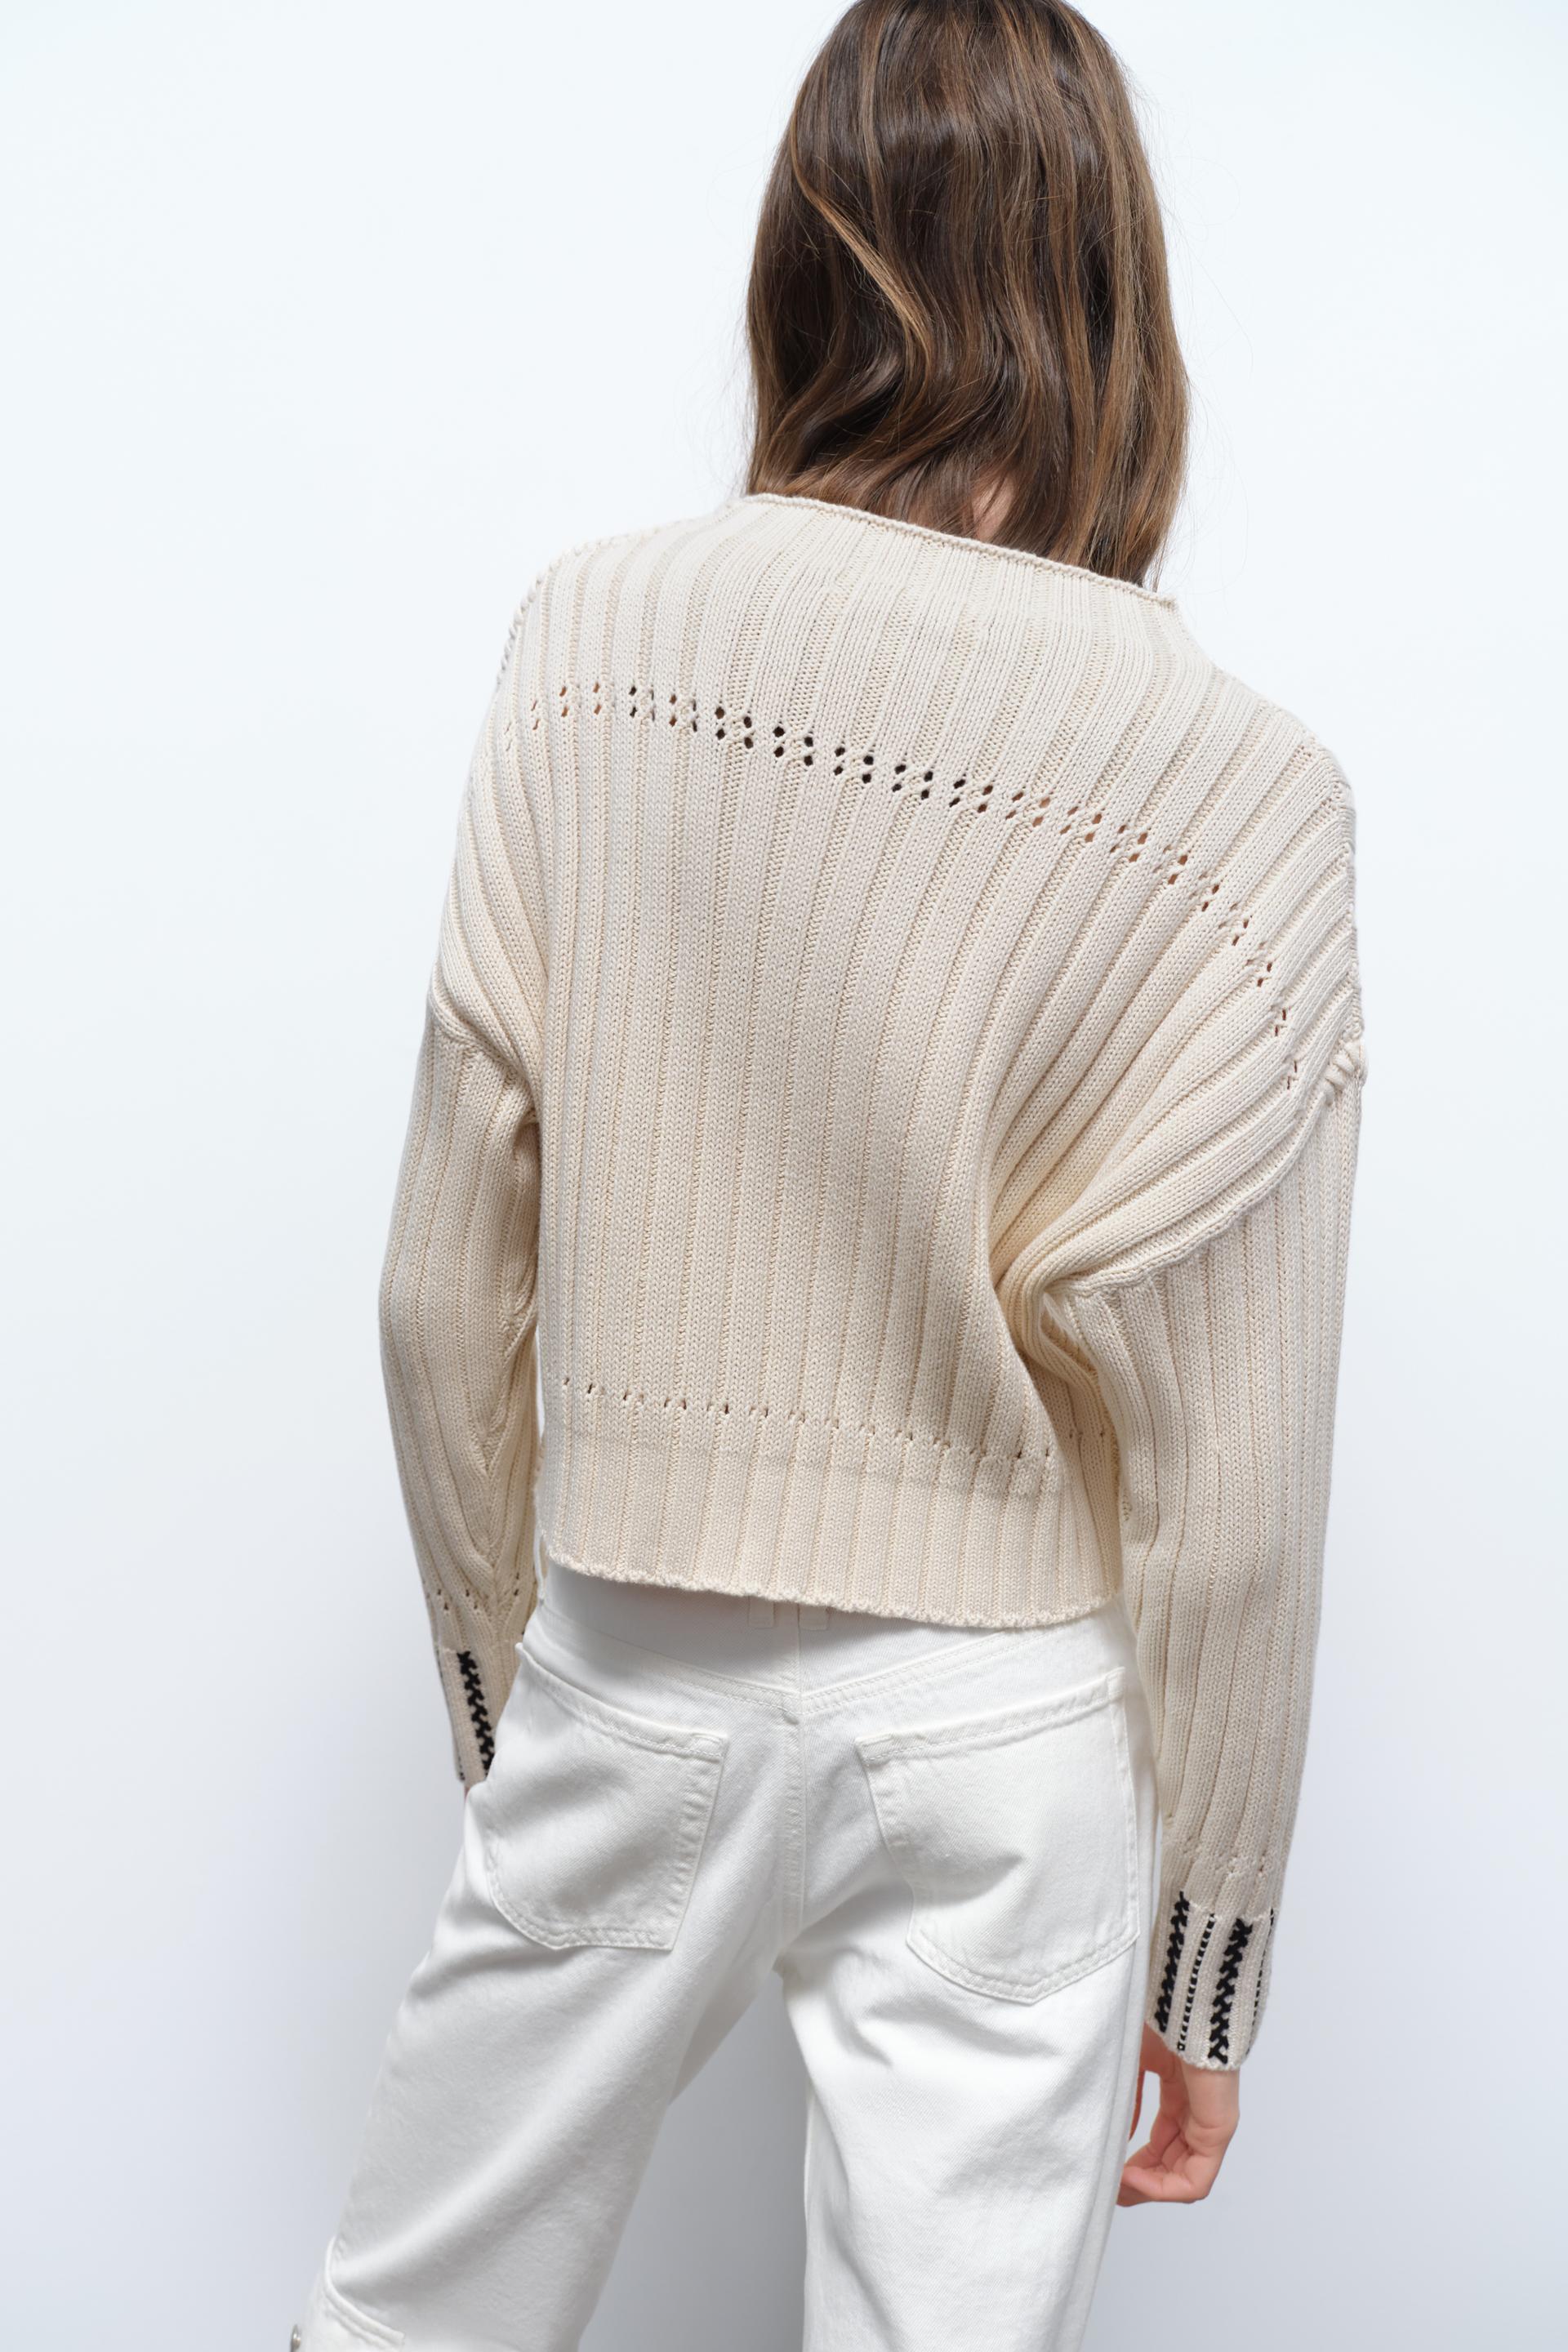 Zara Women's Ribbed Knit Sweater Cream High Collar Long Sleeve